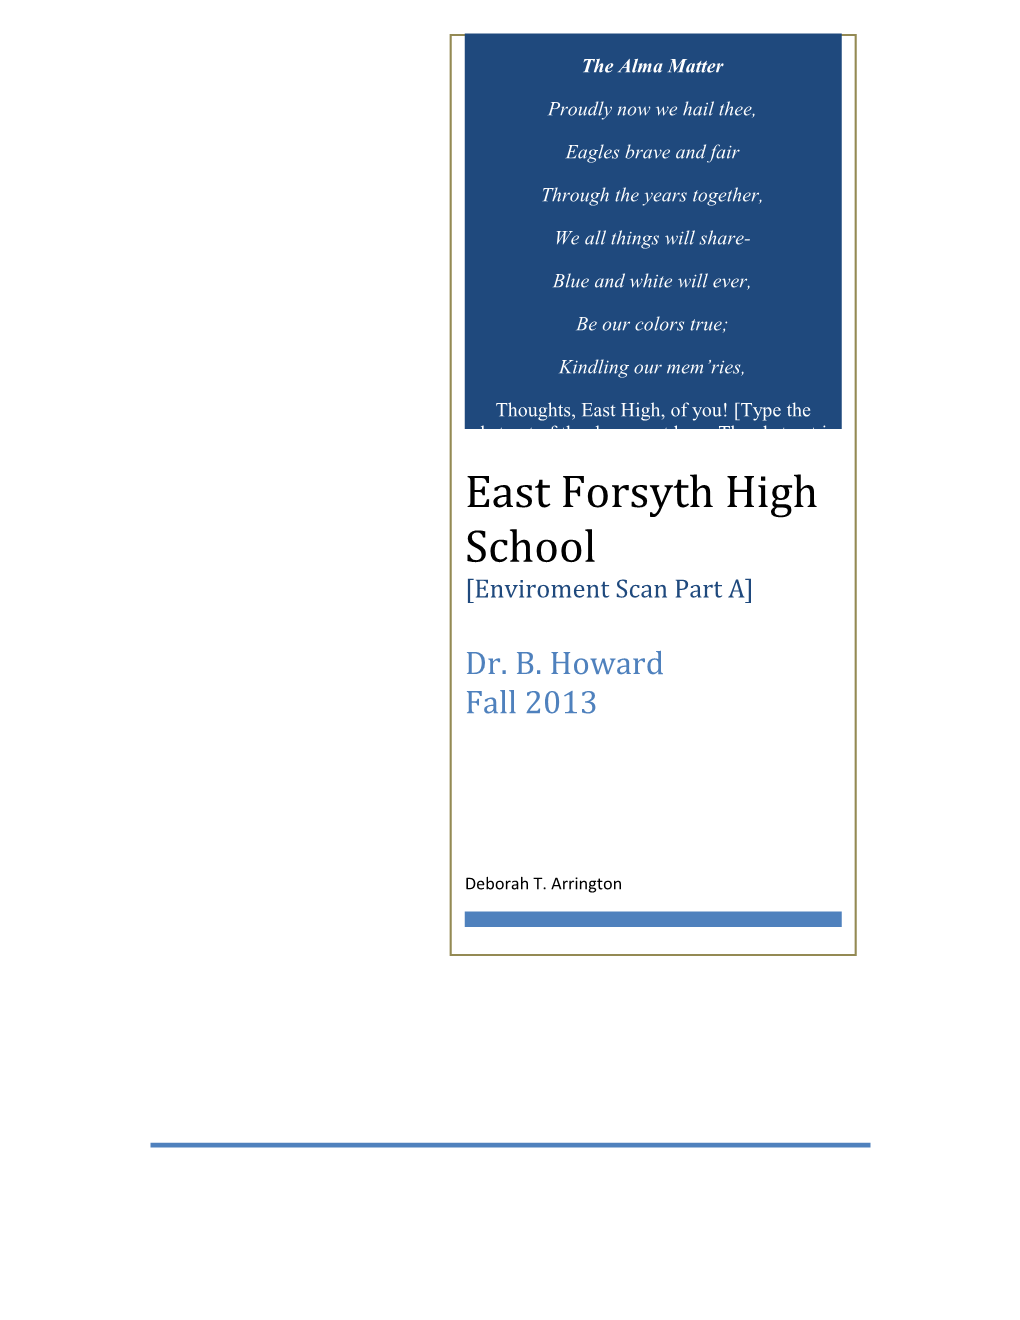 East Forsyth High School History